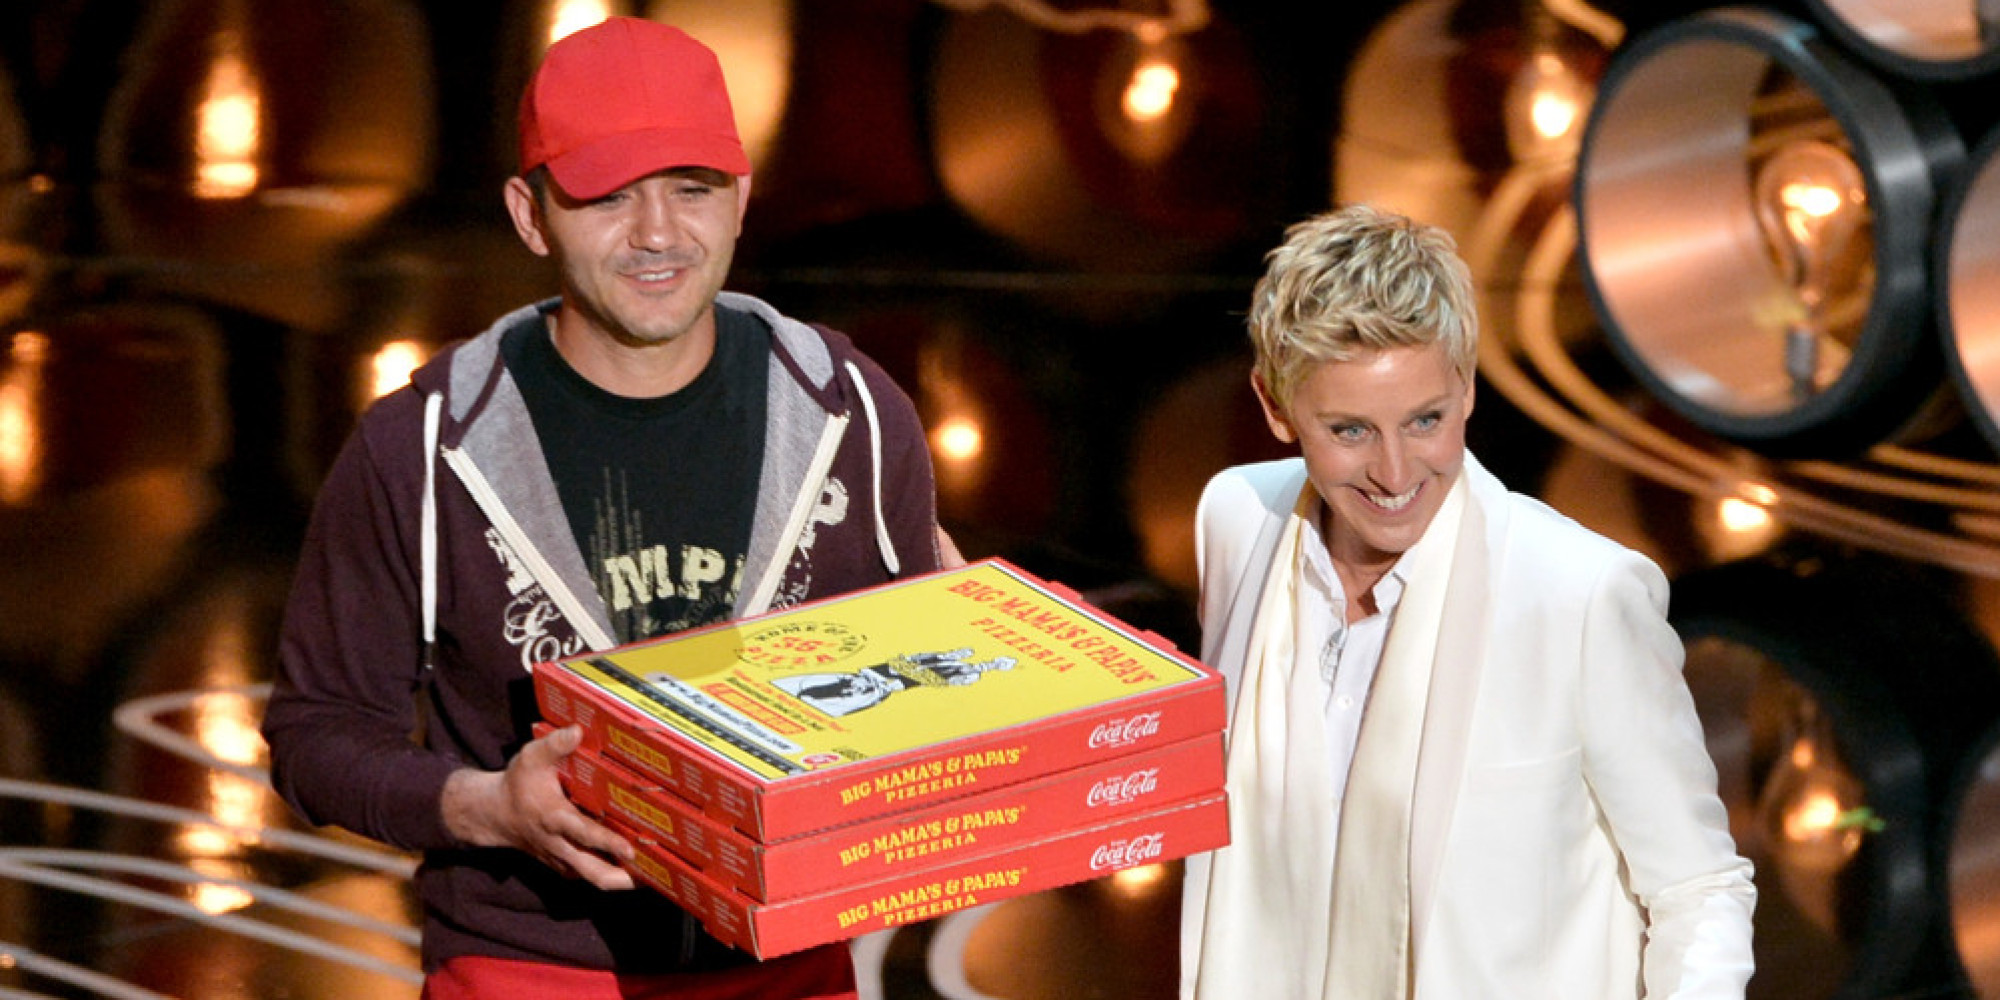 Martirosyan, the famed Oscars pizza man, poses with host Ellen DeGeneres. 